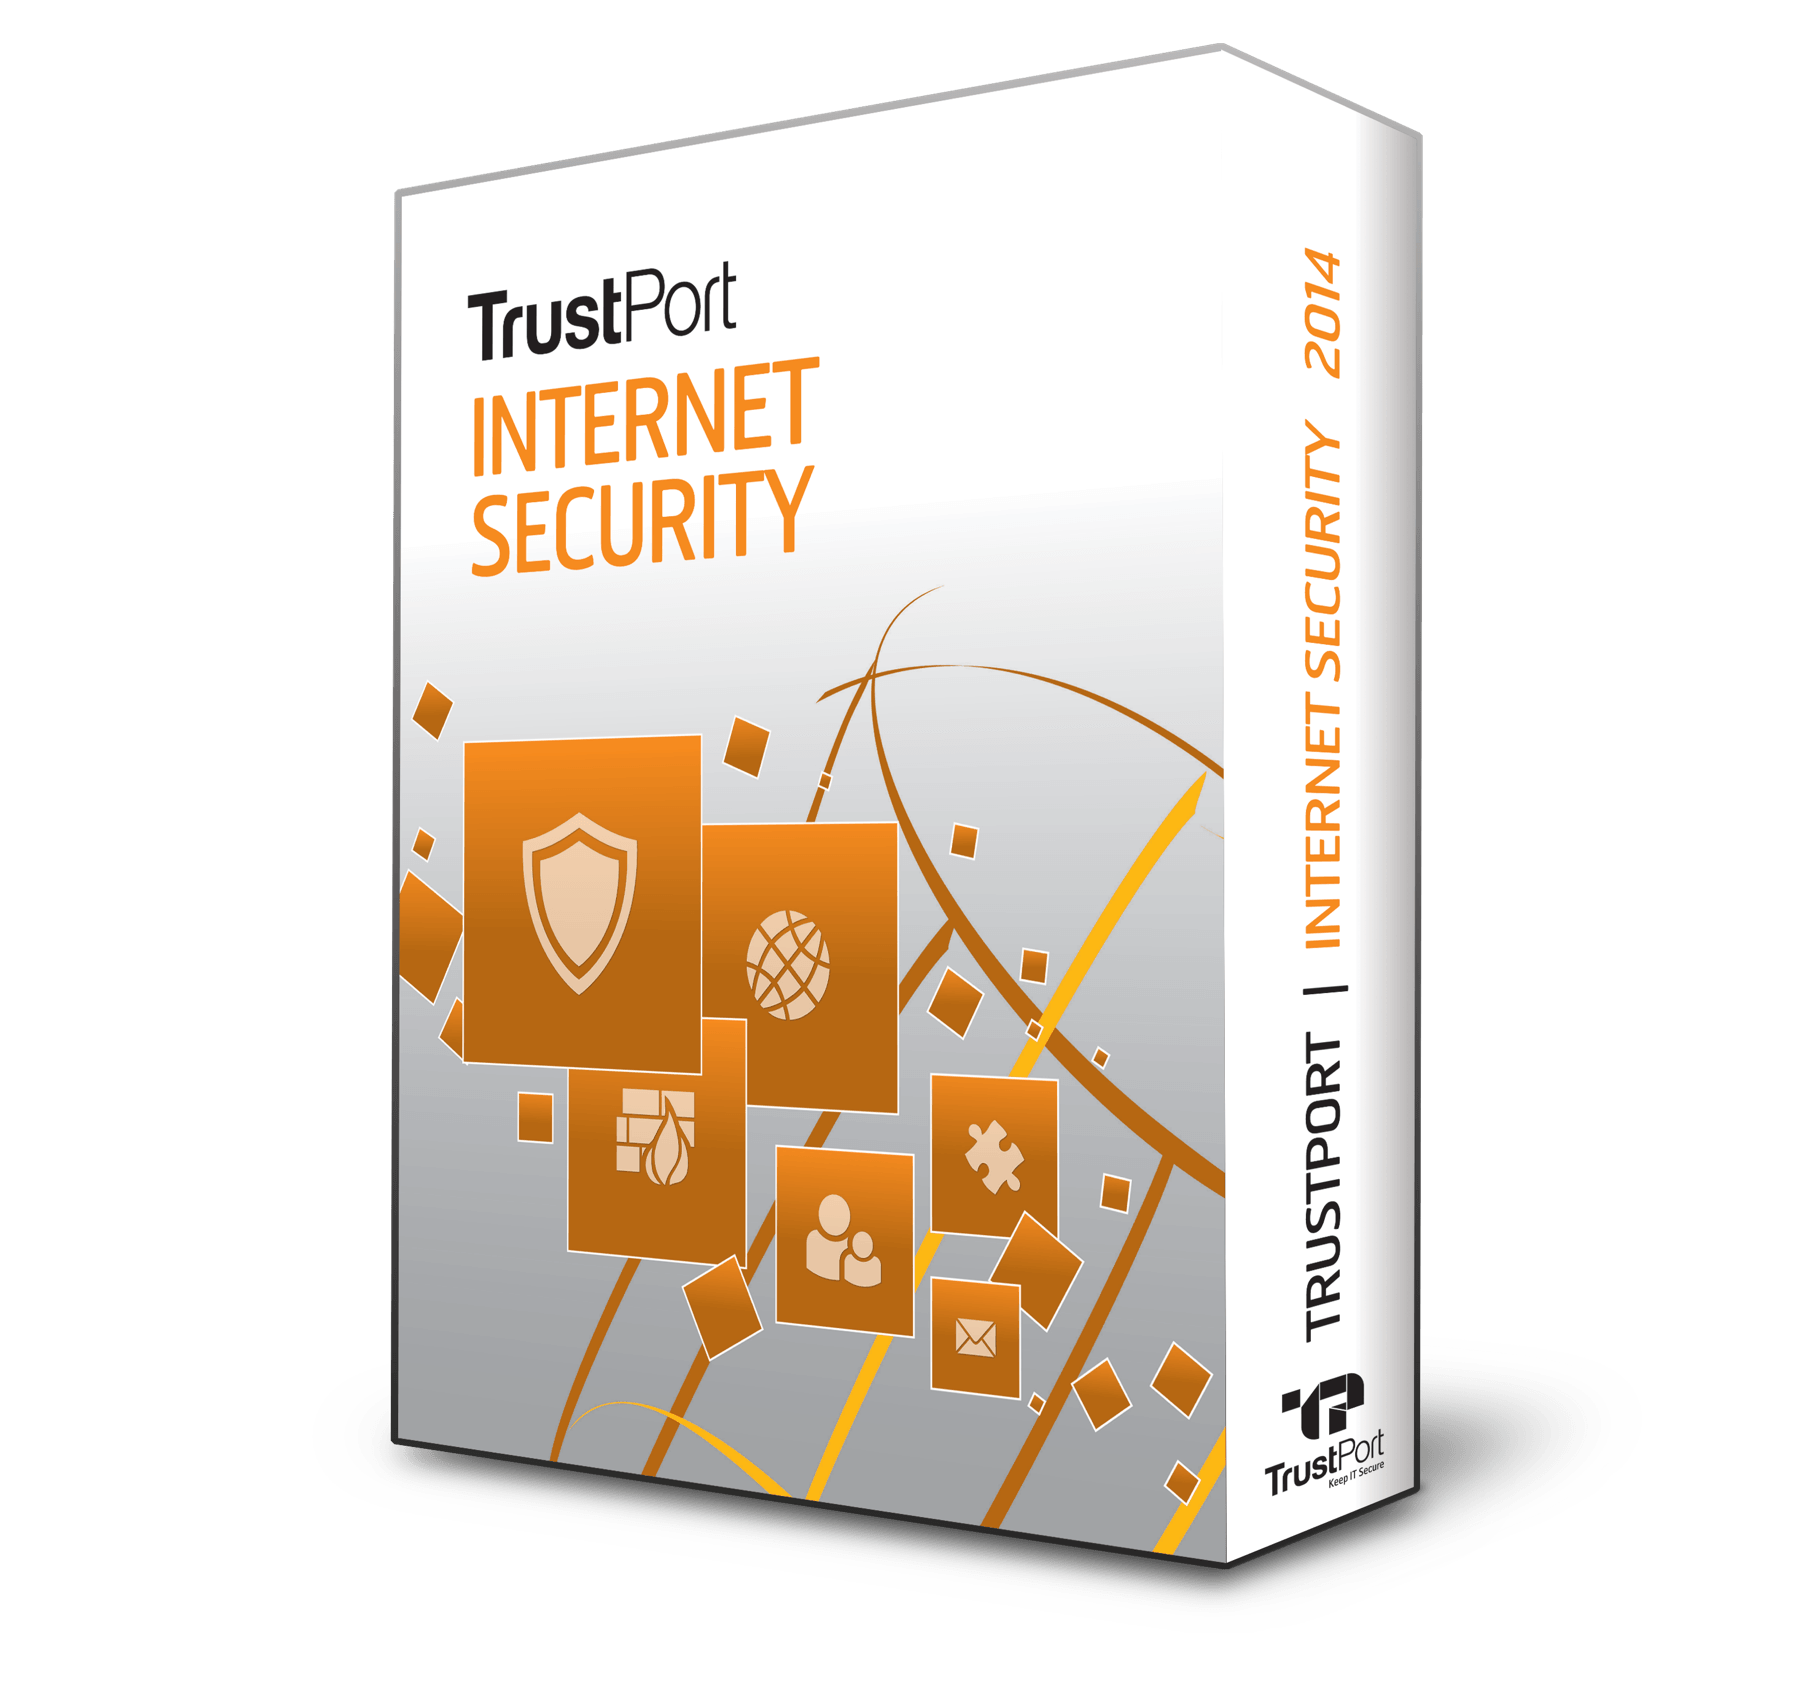 Trustport internet security 2017